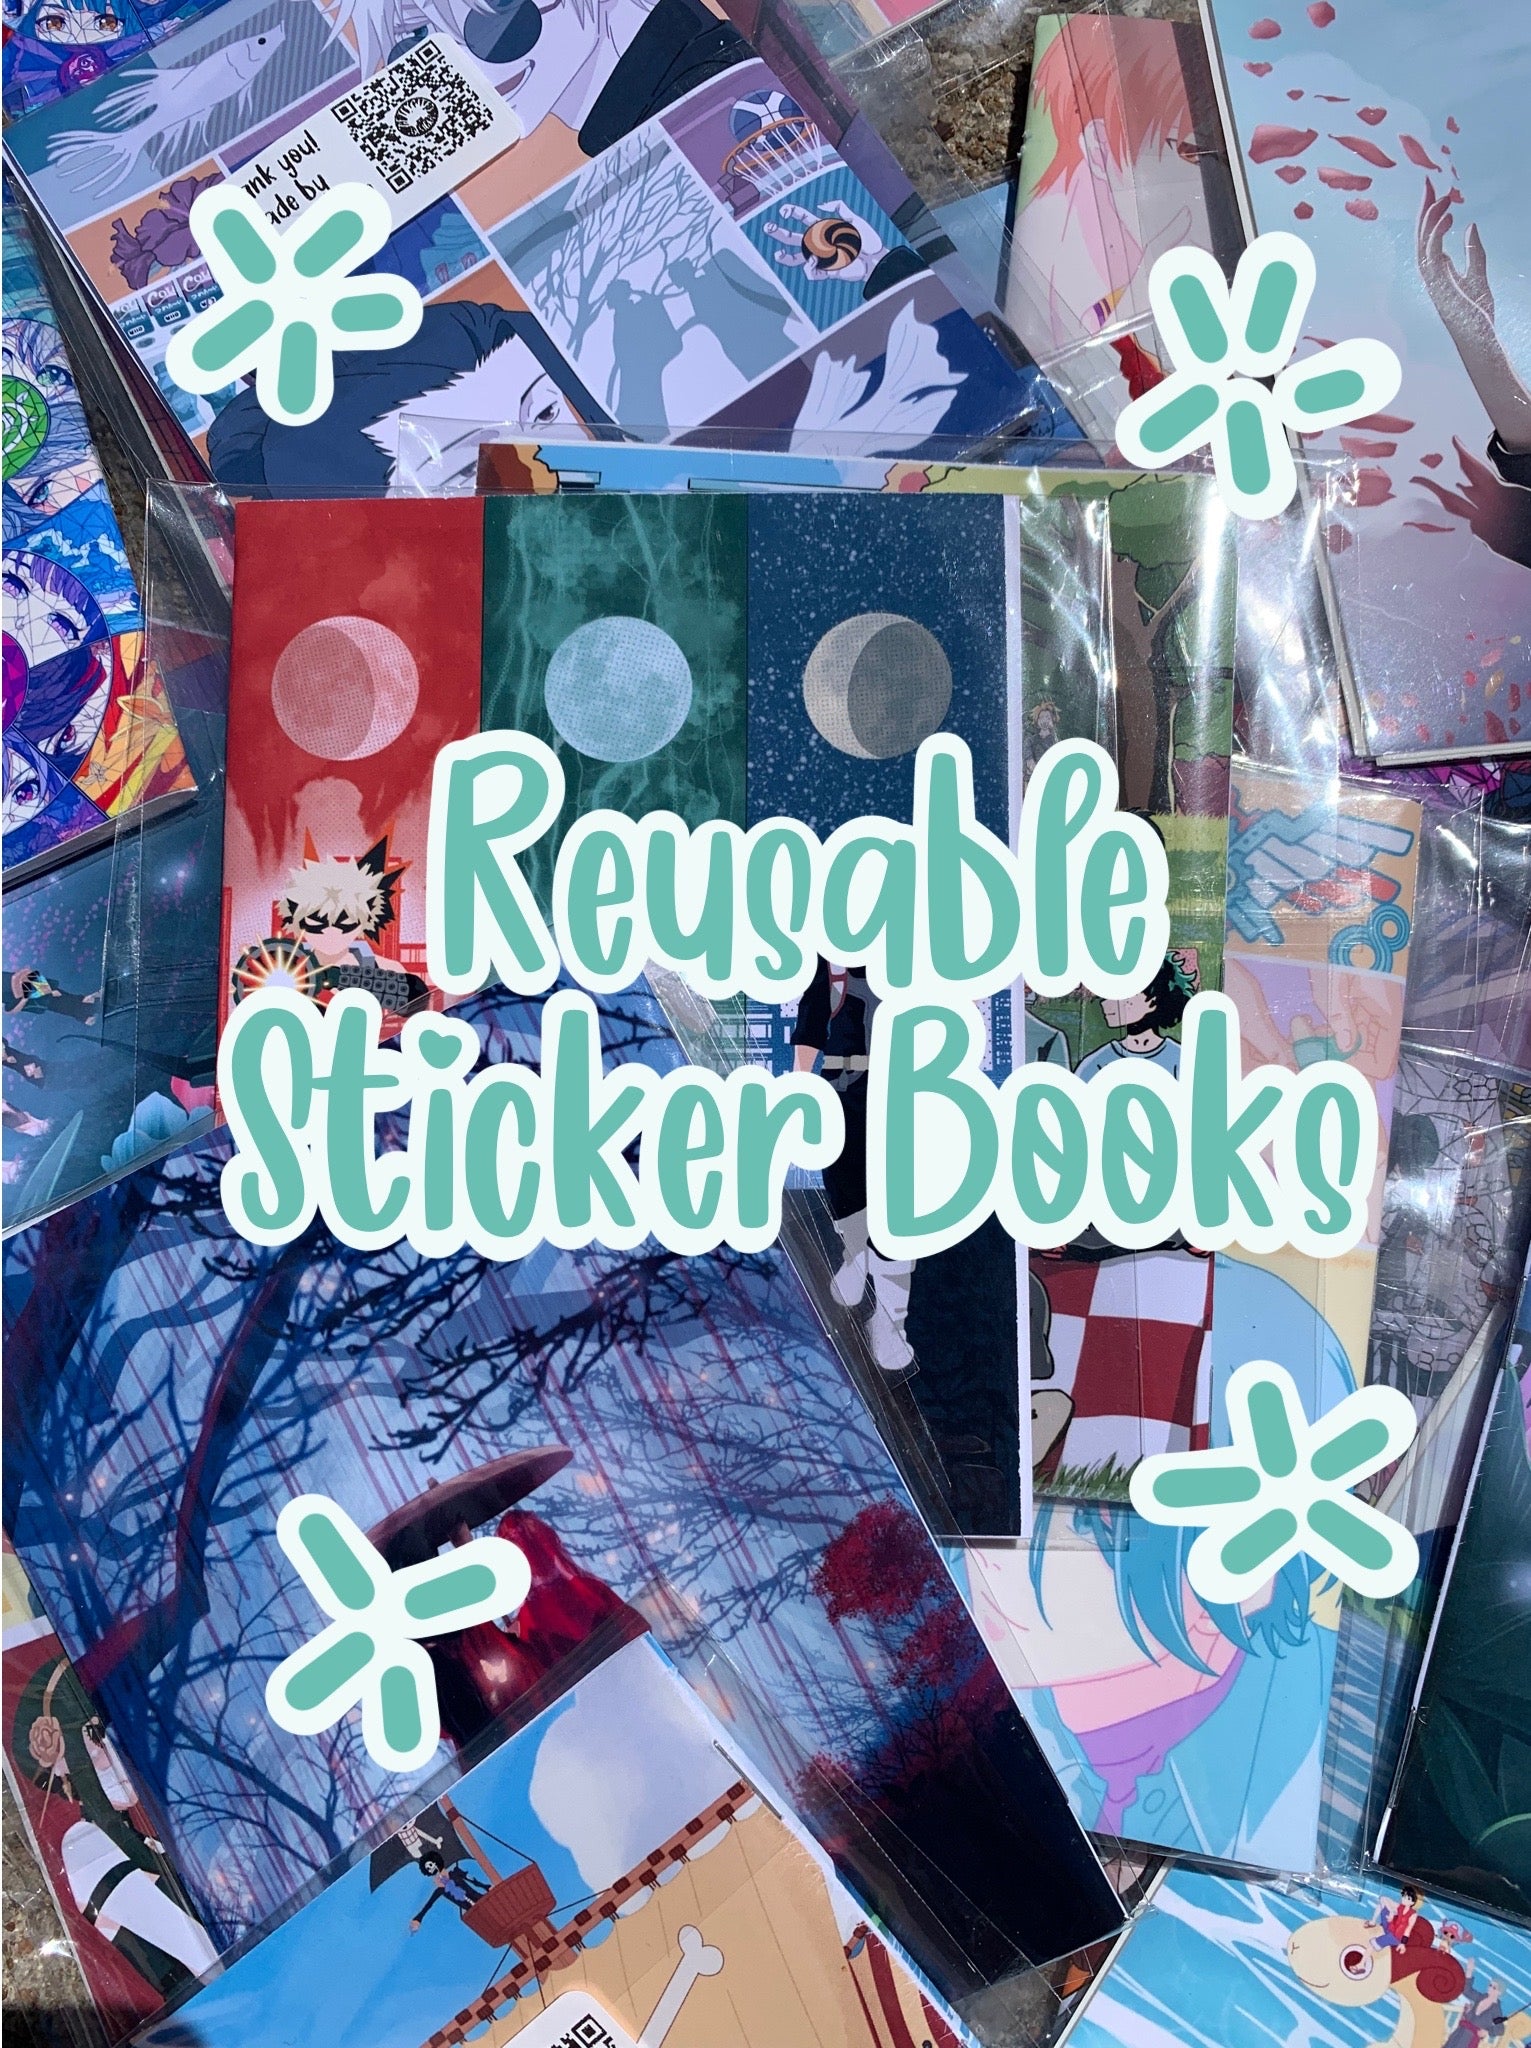 Reusable Sticker Book